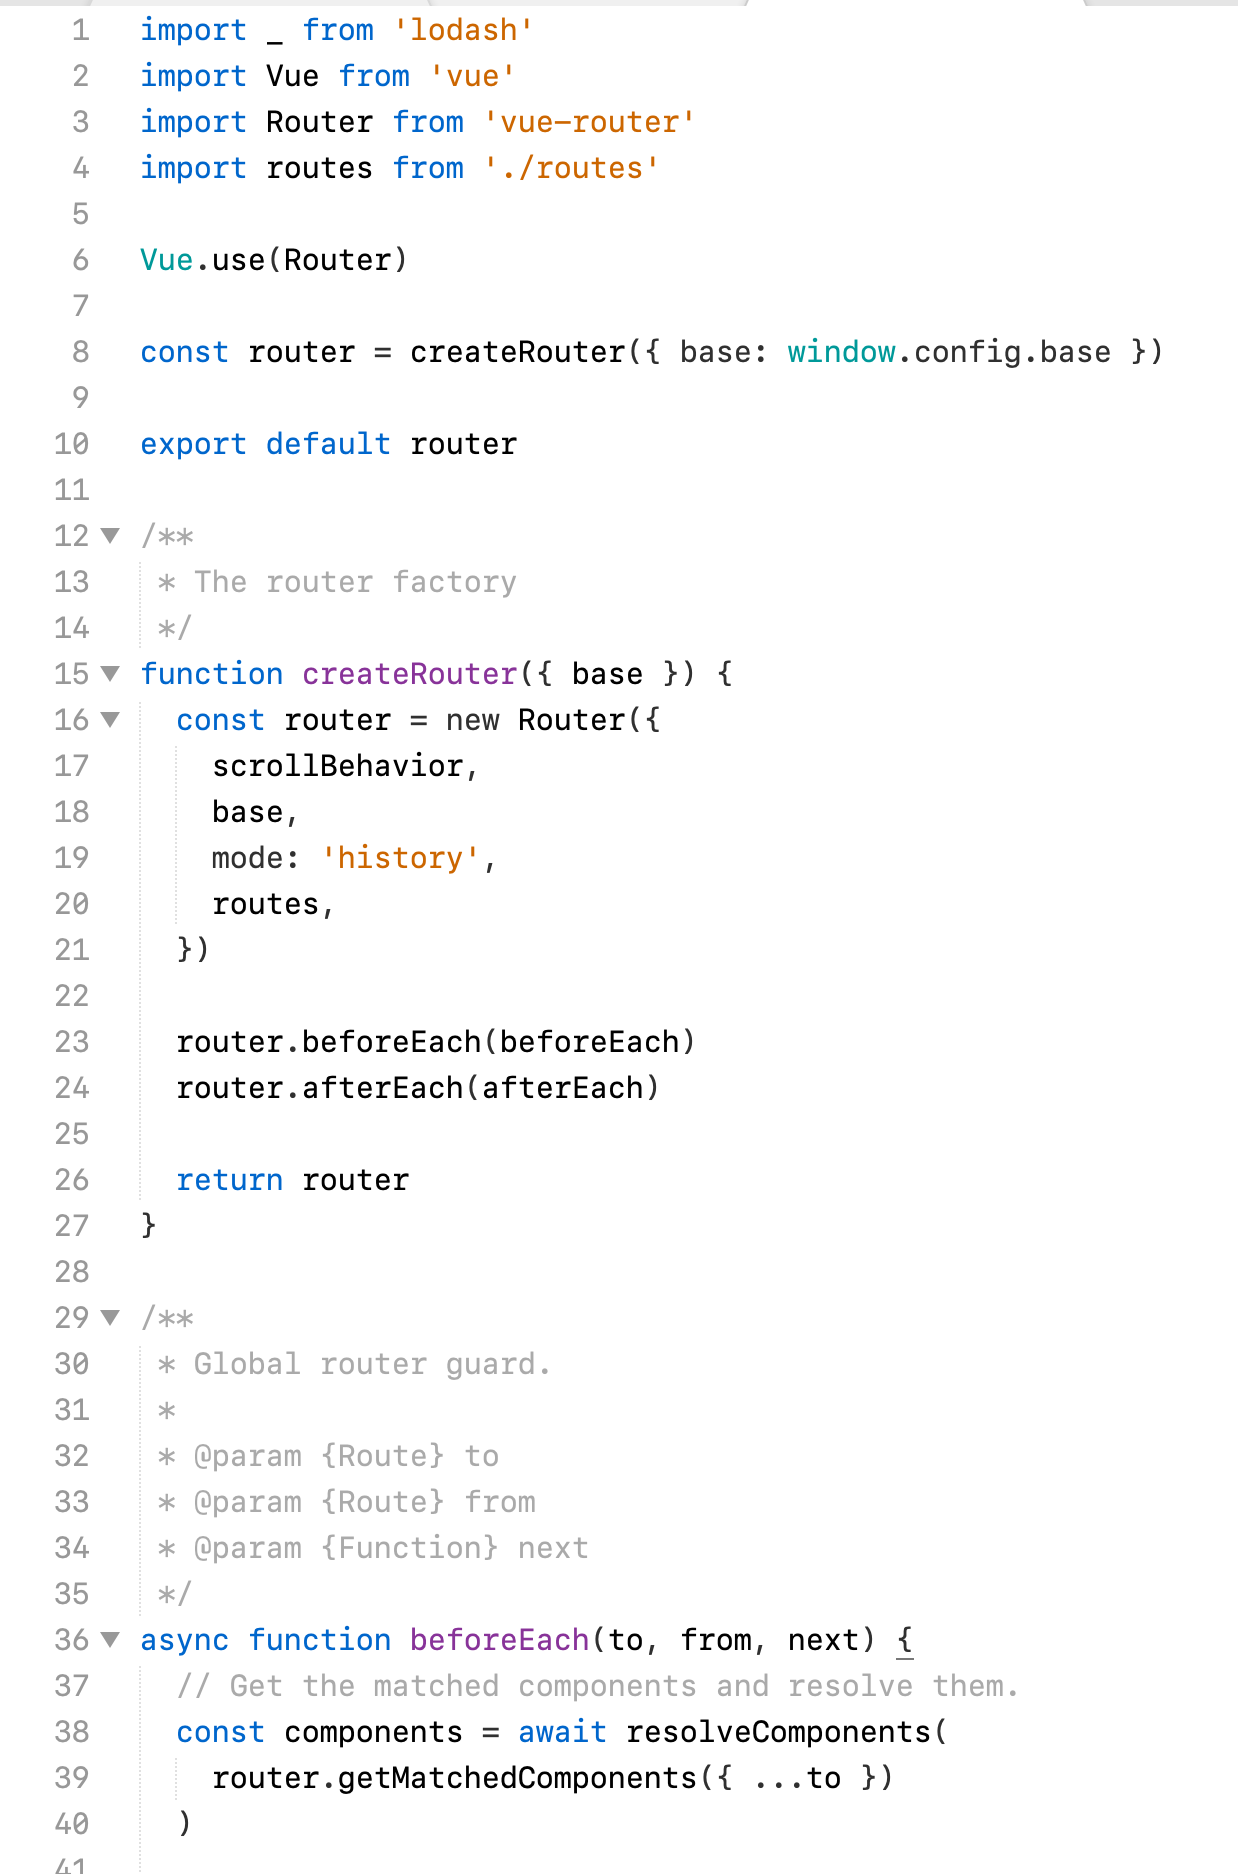 JavaScript syntax highlighting